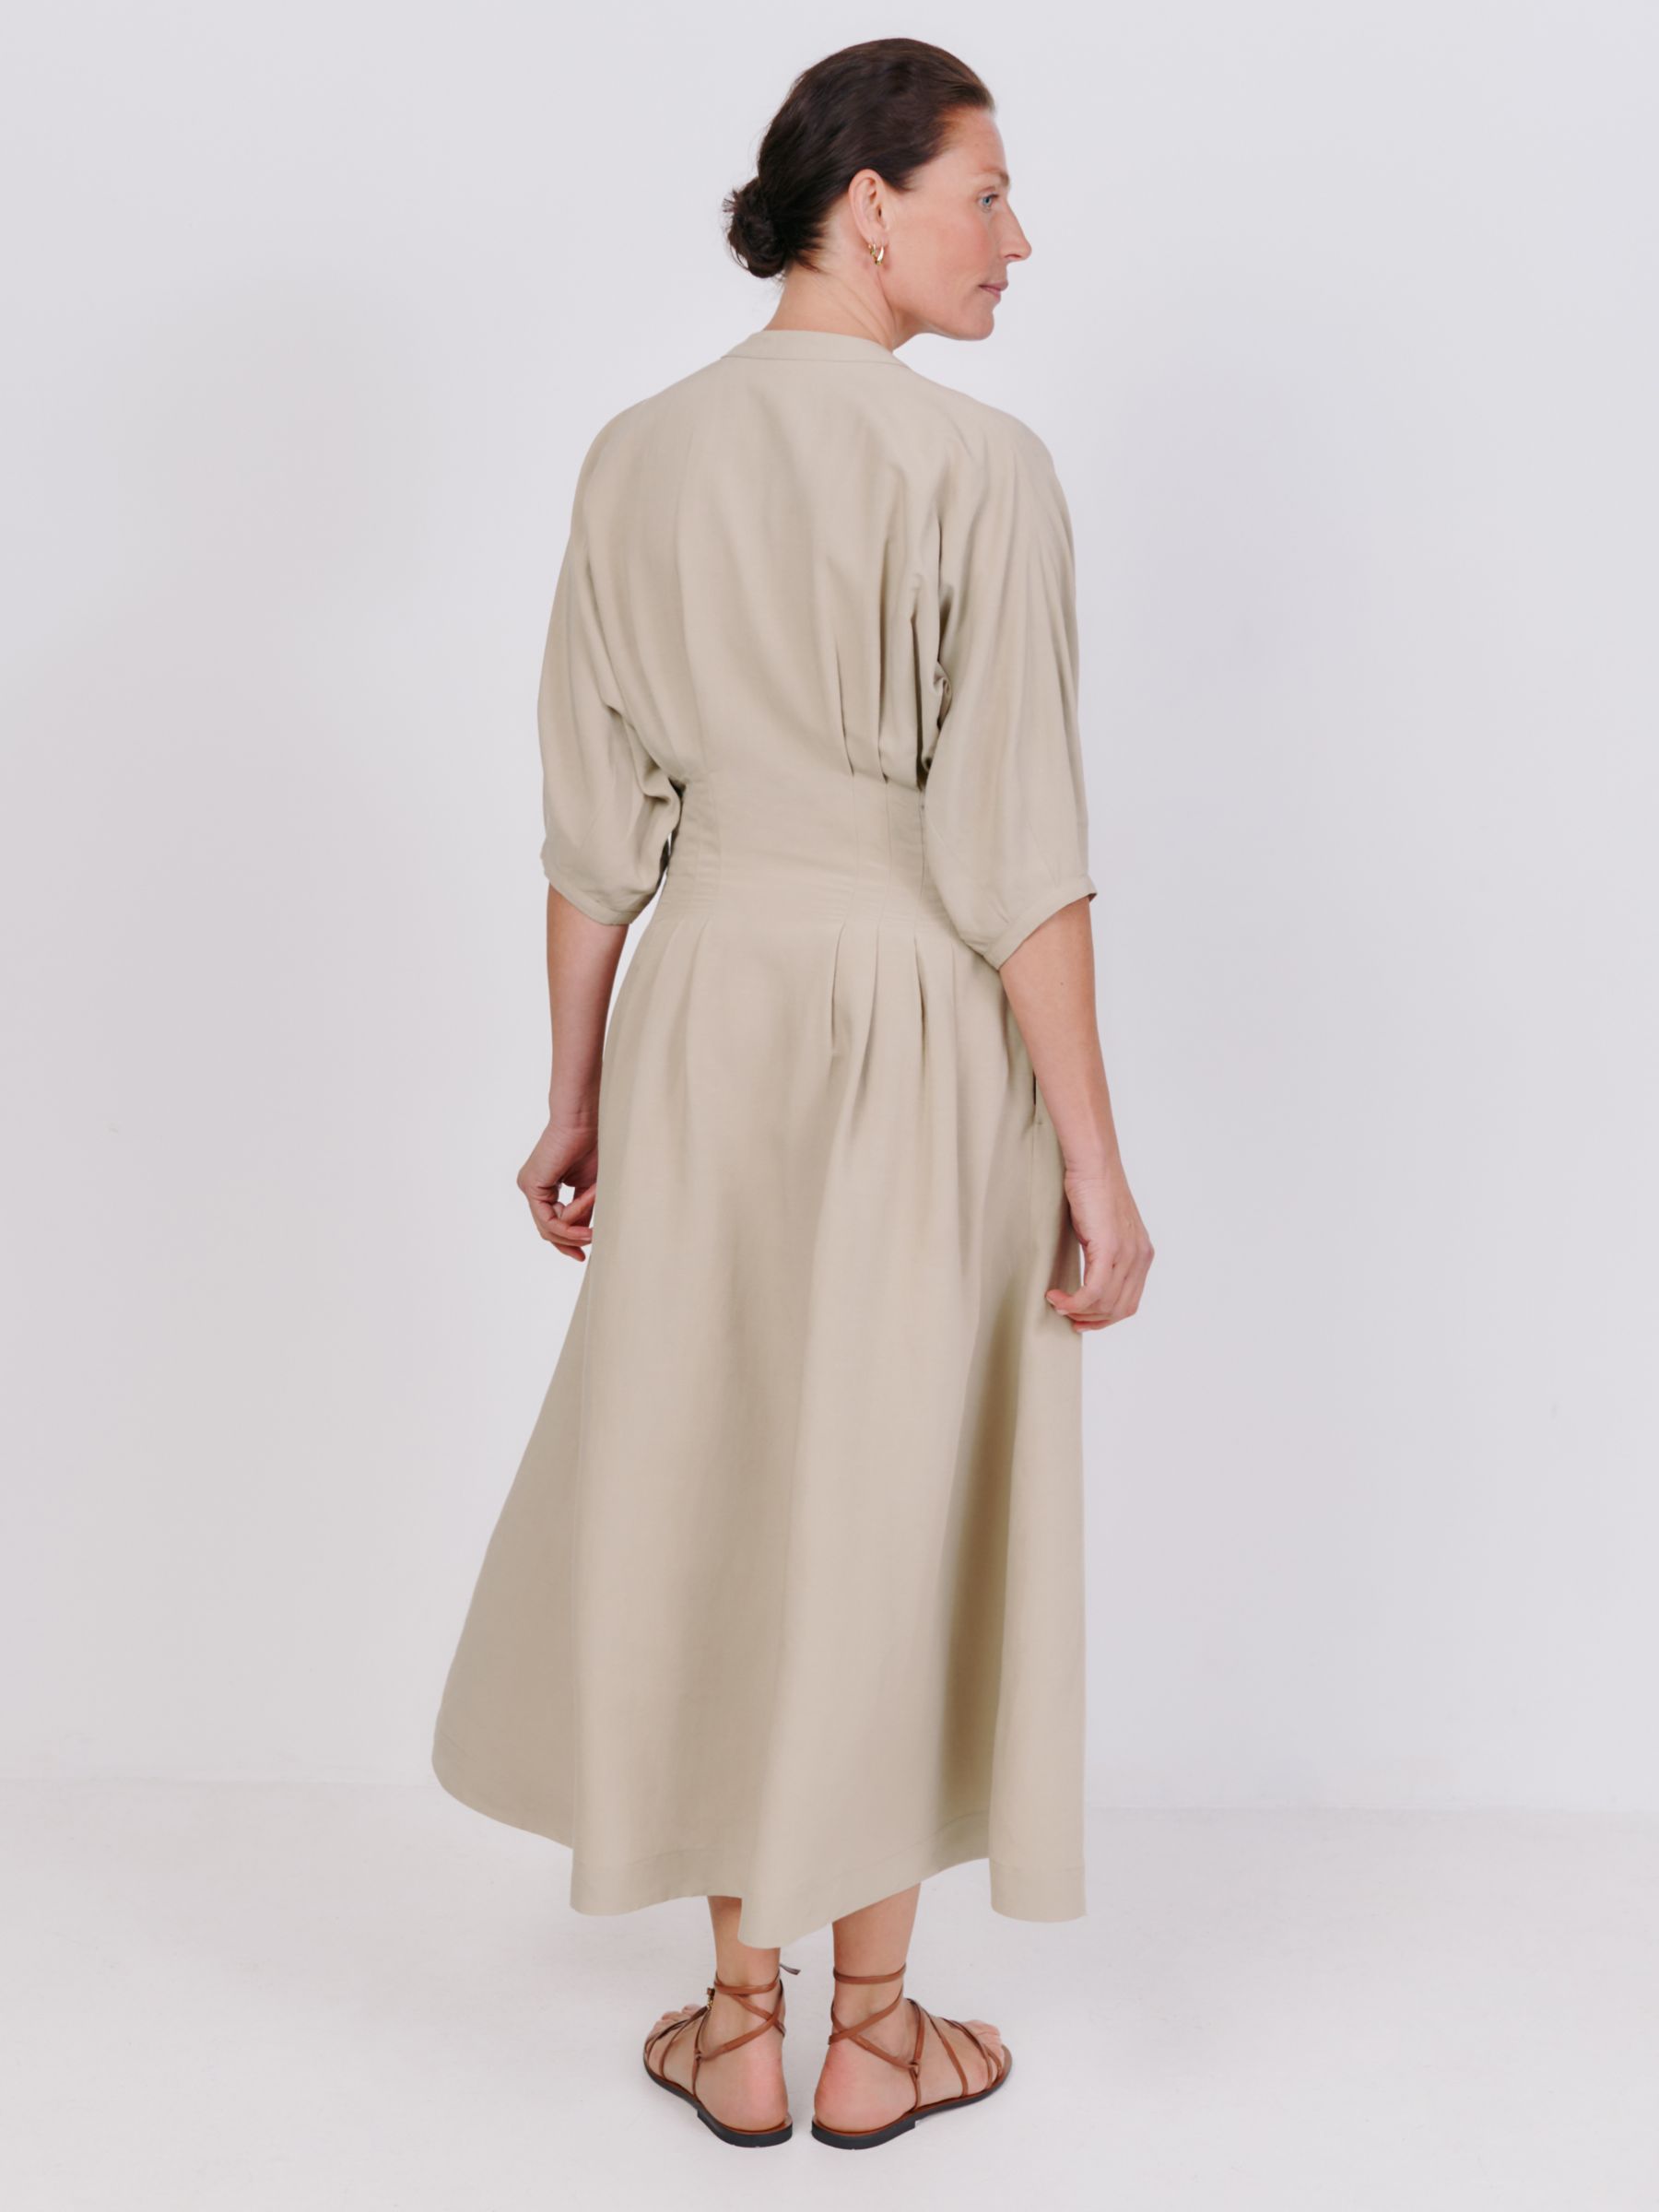 Vivere By Savannah Miller Nova Pintuck Linen Blend Midi Dress, Camel, 6